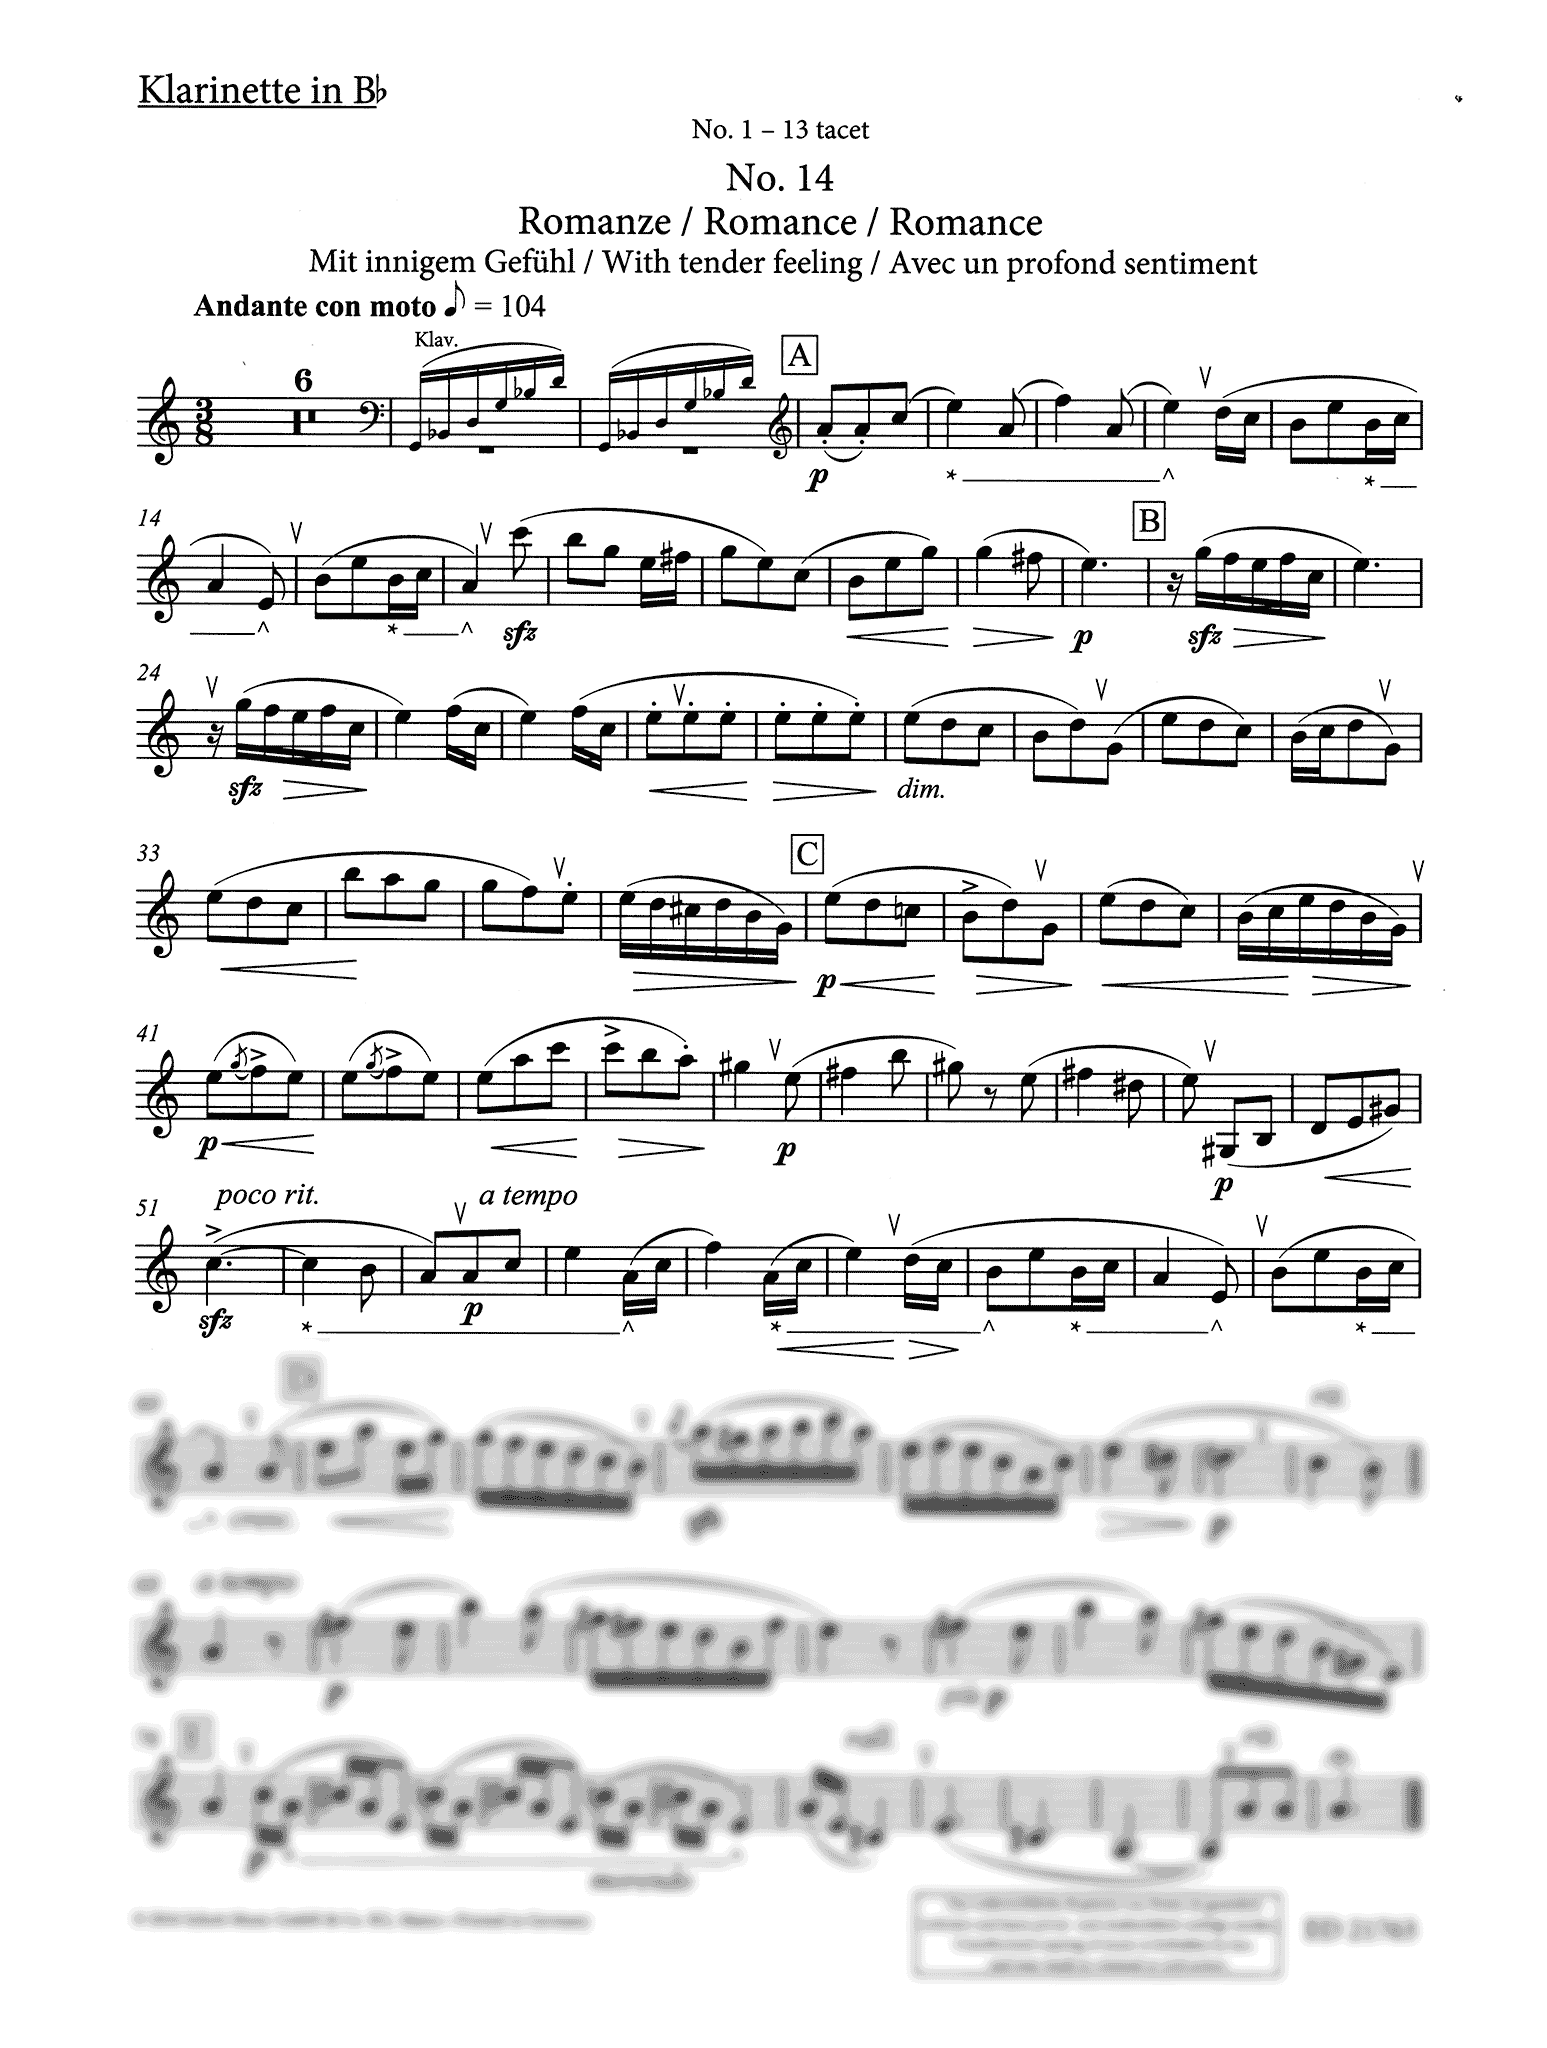 Baermann Clarinet Method Tune Book 1 Clarinet part